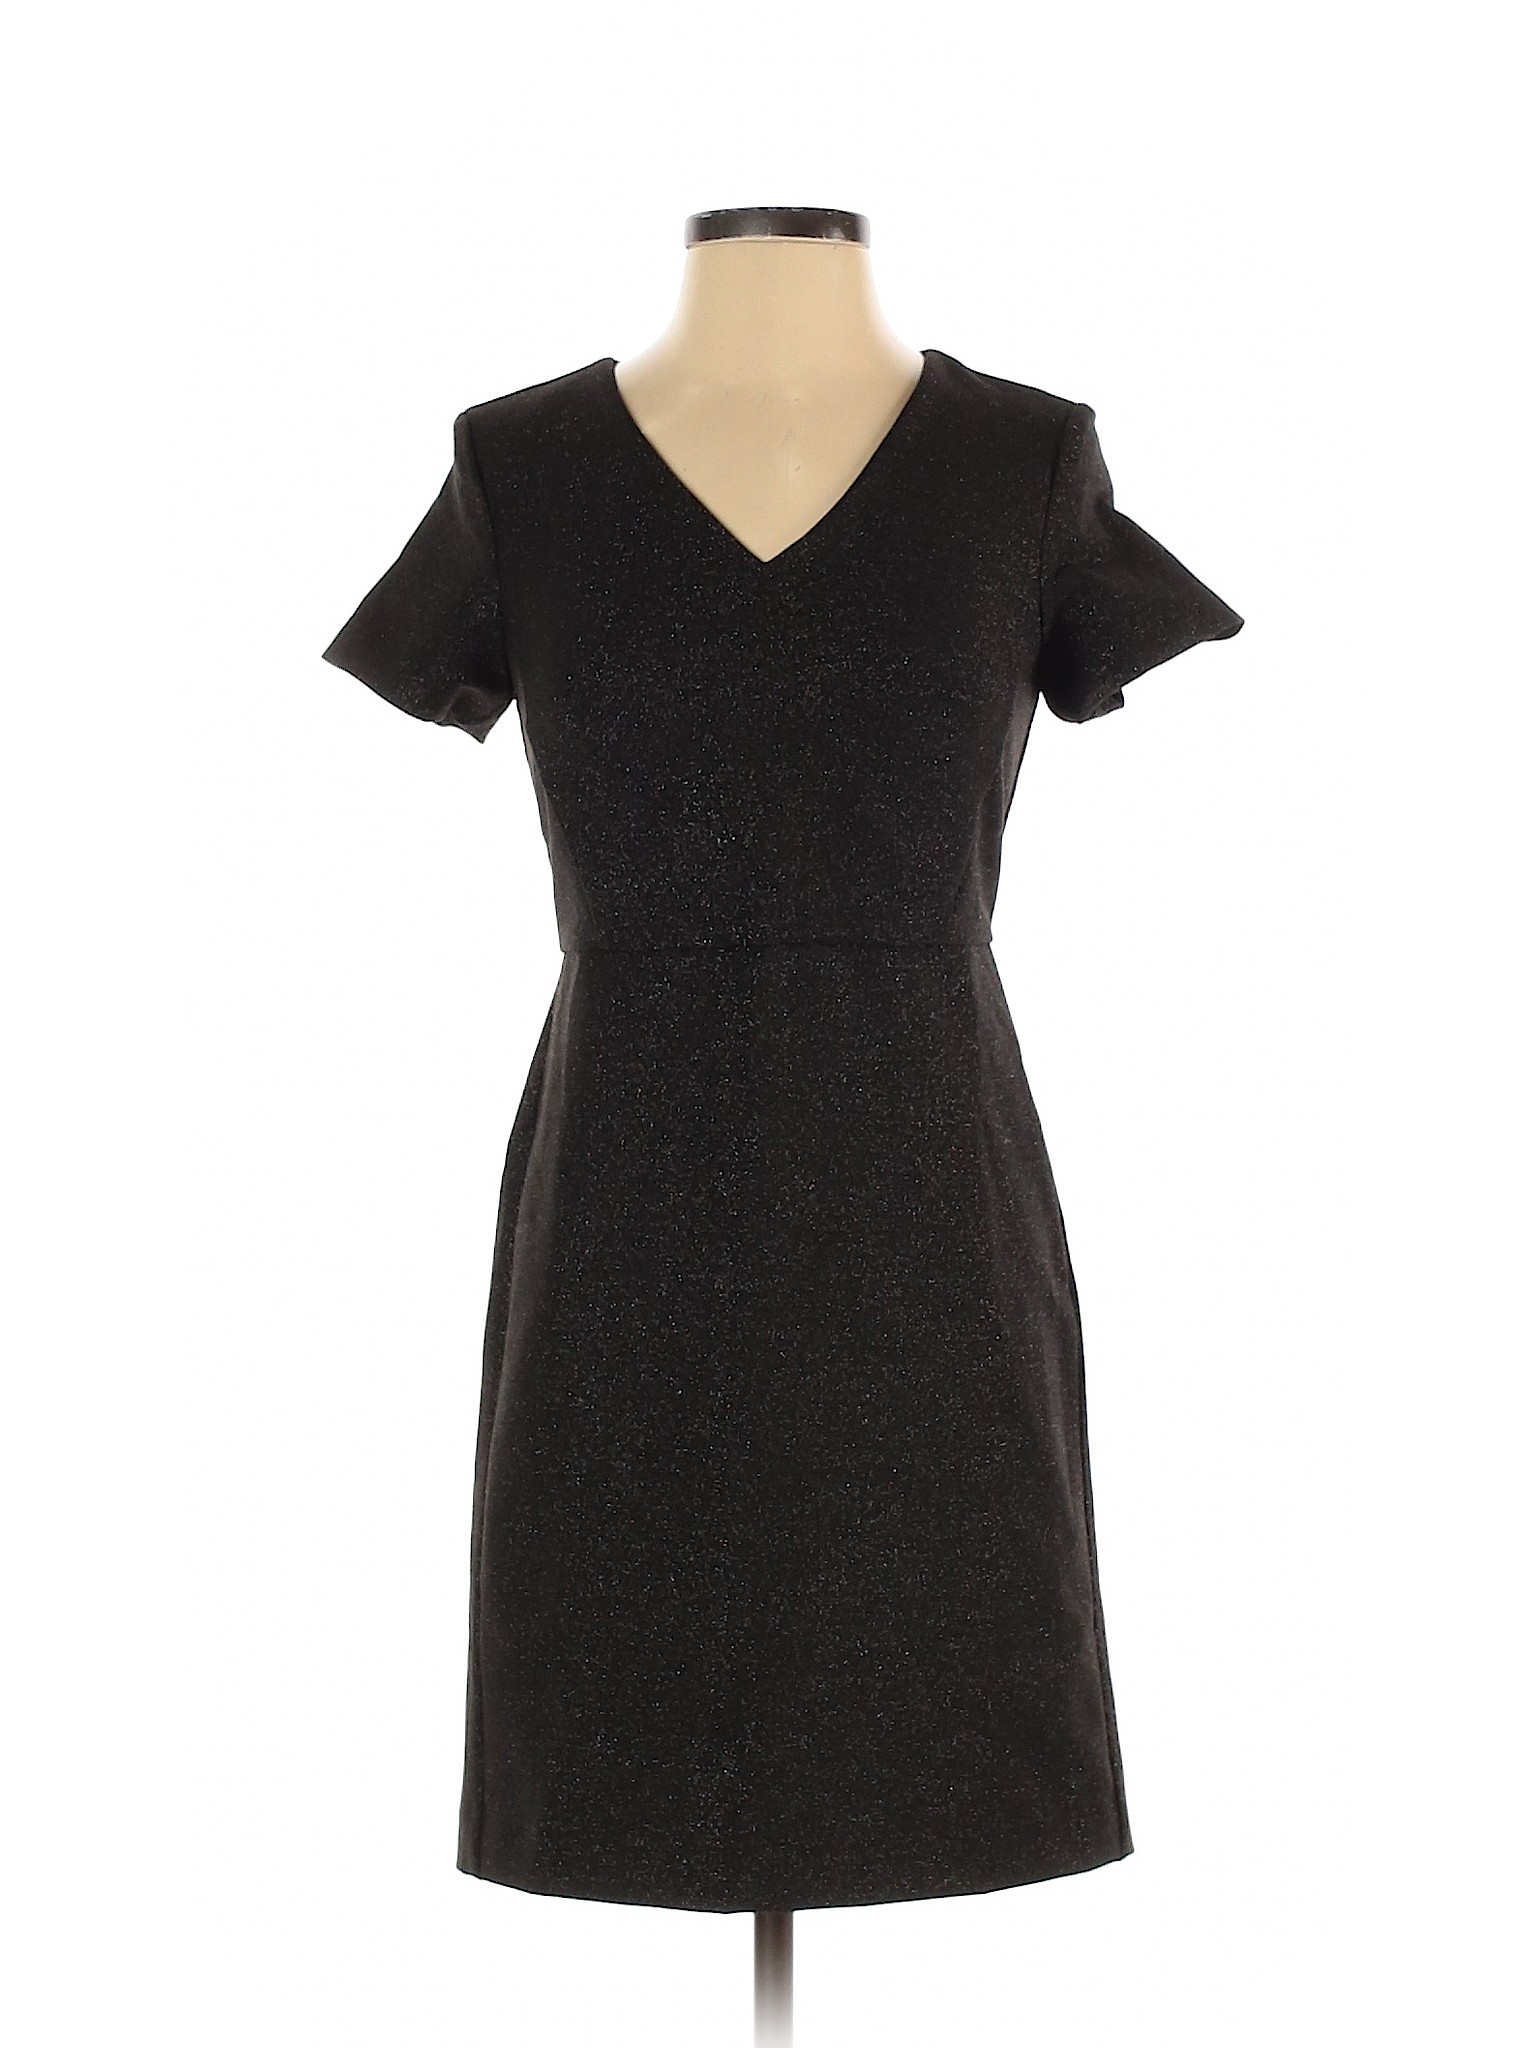 NWT Ann Taylor Women Black Casual Dress 00 Petites | eBay